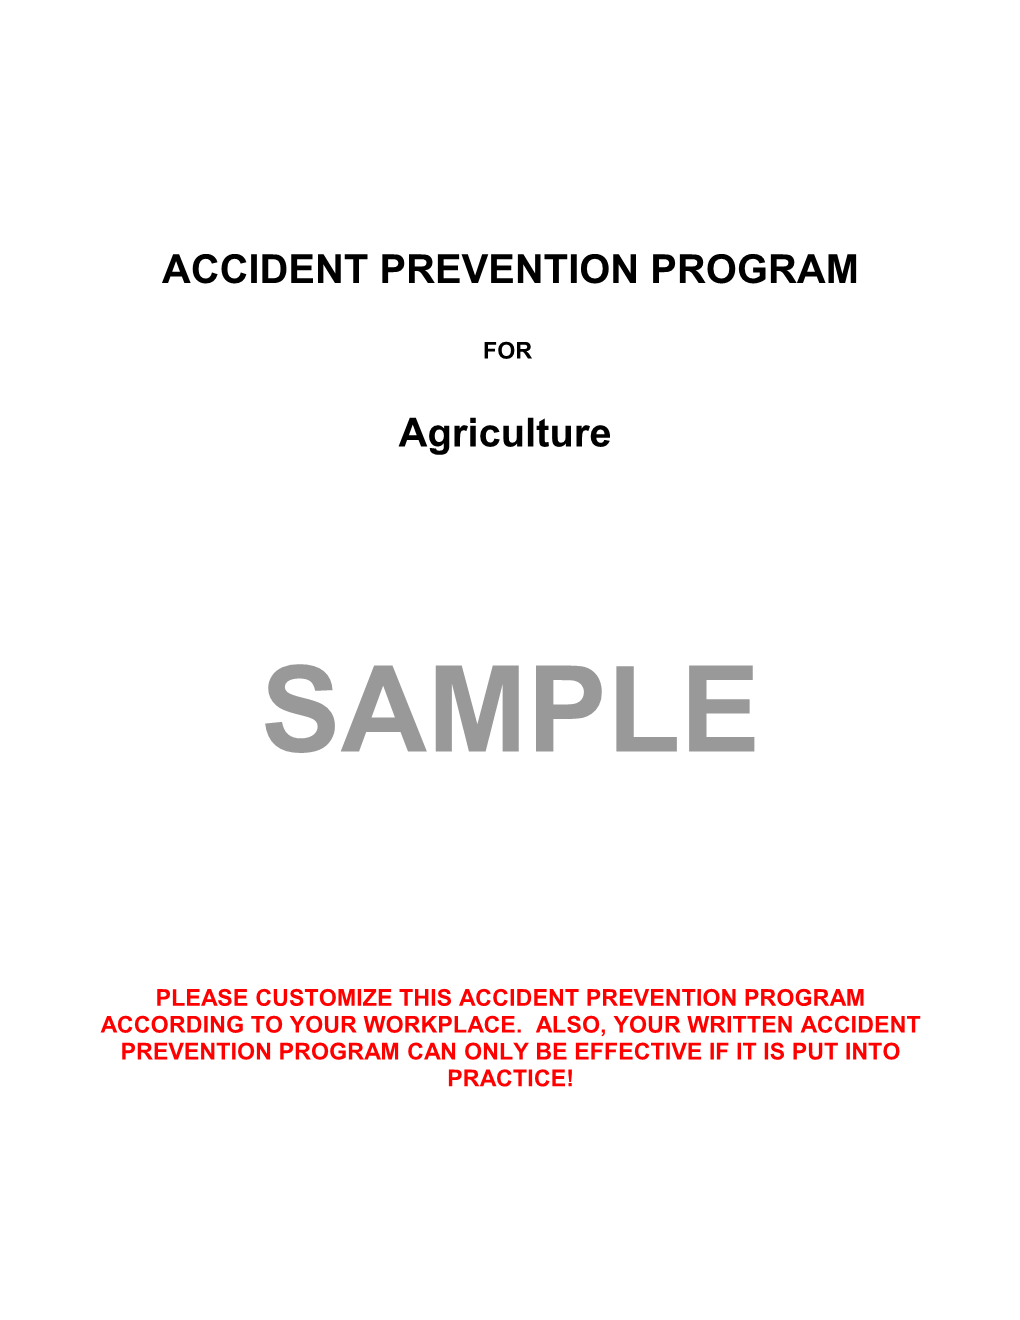 Sample Accident Prevention Program (APP) for Agriculture